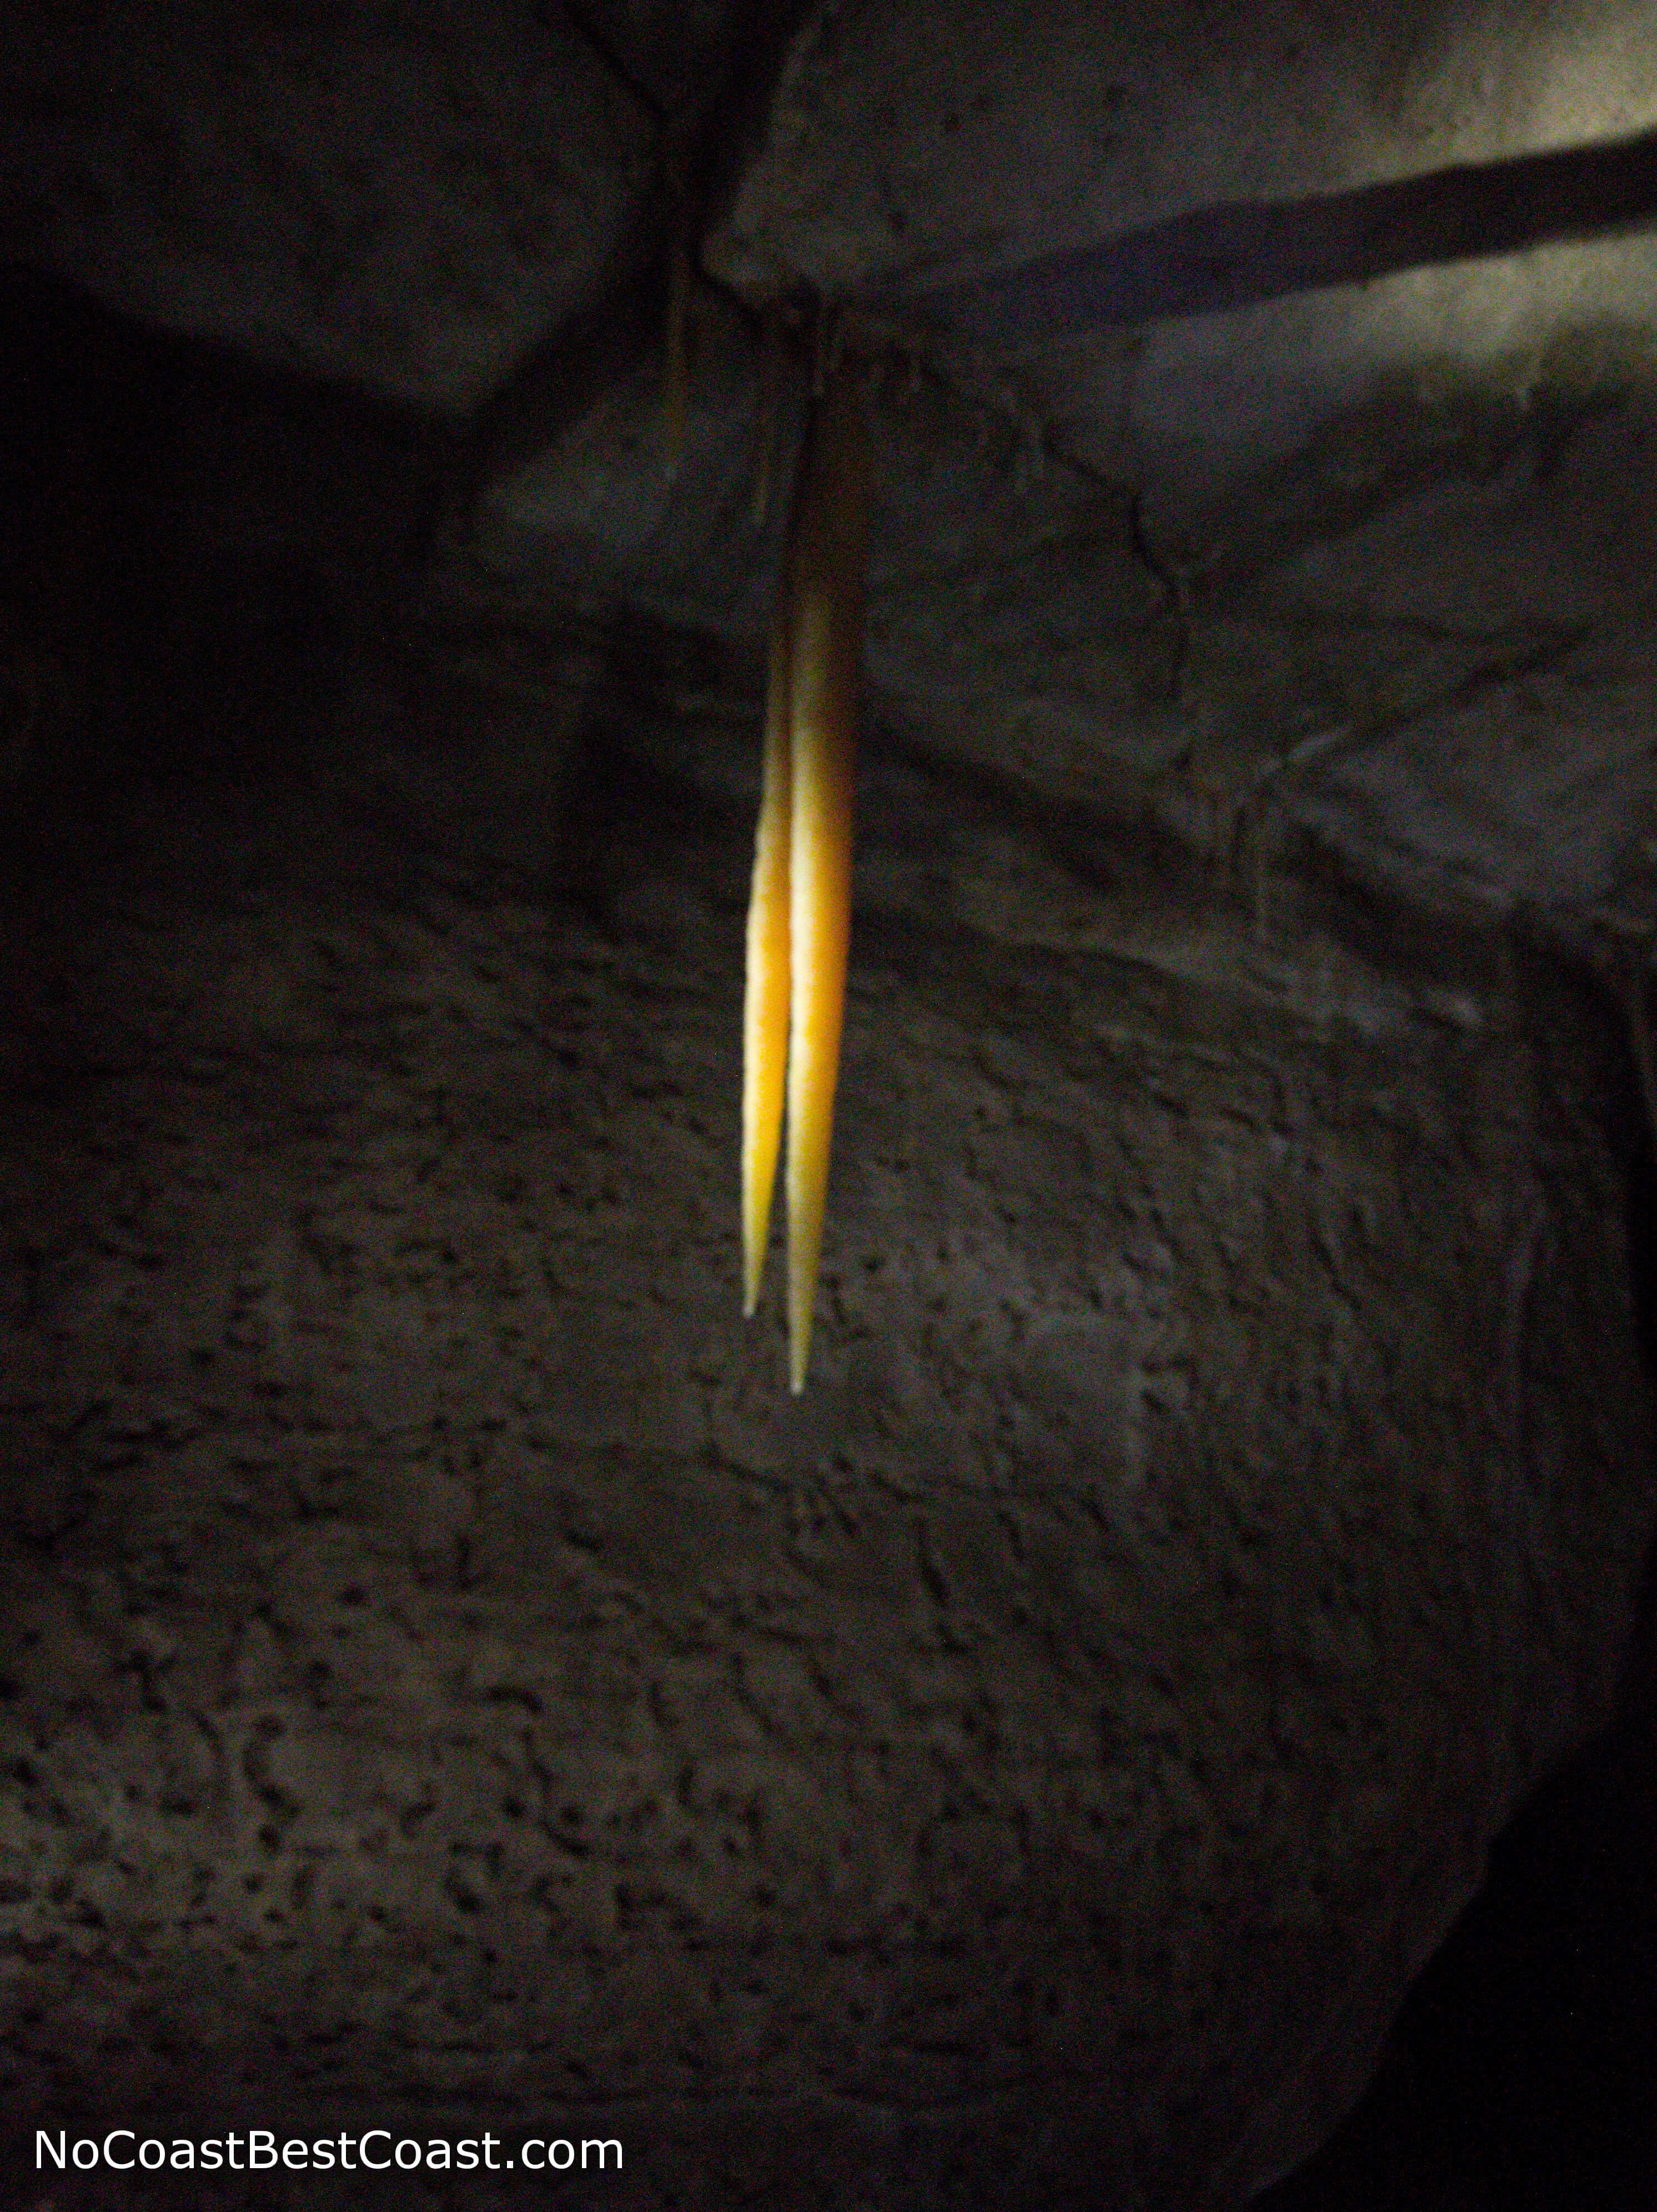 The stalactites known as the Carrot Sticks